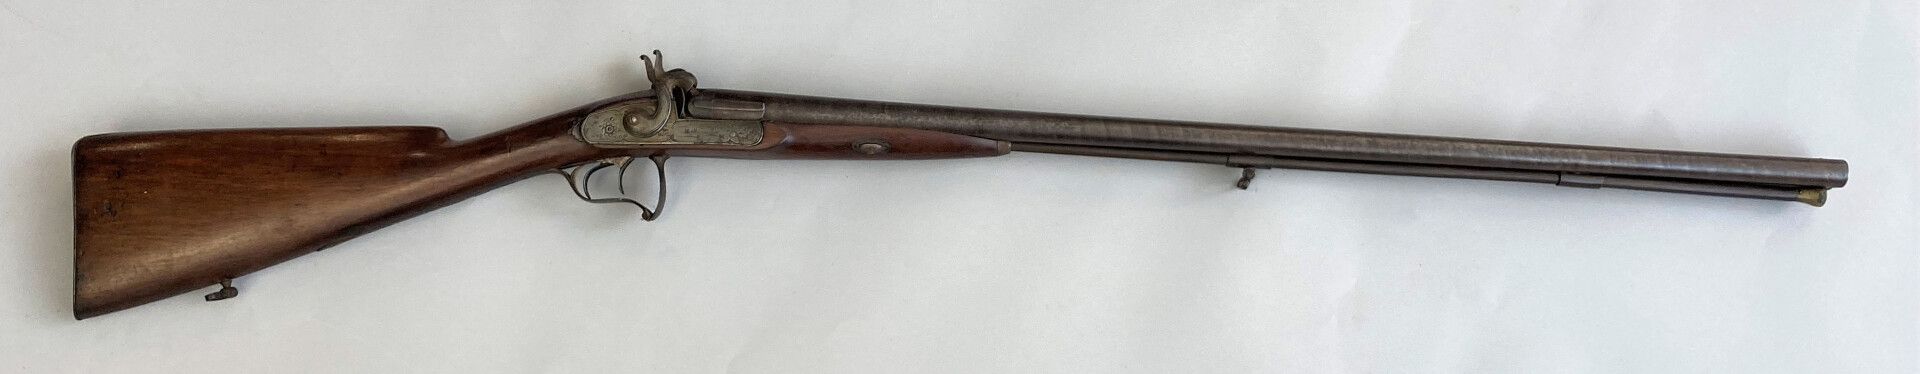 Null 马赛Bounin制作的带前锁的并列式打击猎枪。16口径的大马士革枪管，一磅。胡桃木框架。卷轴式扳机防护装置。光滑的清漆胡桃木枪托。功能机制。(1-)